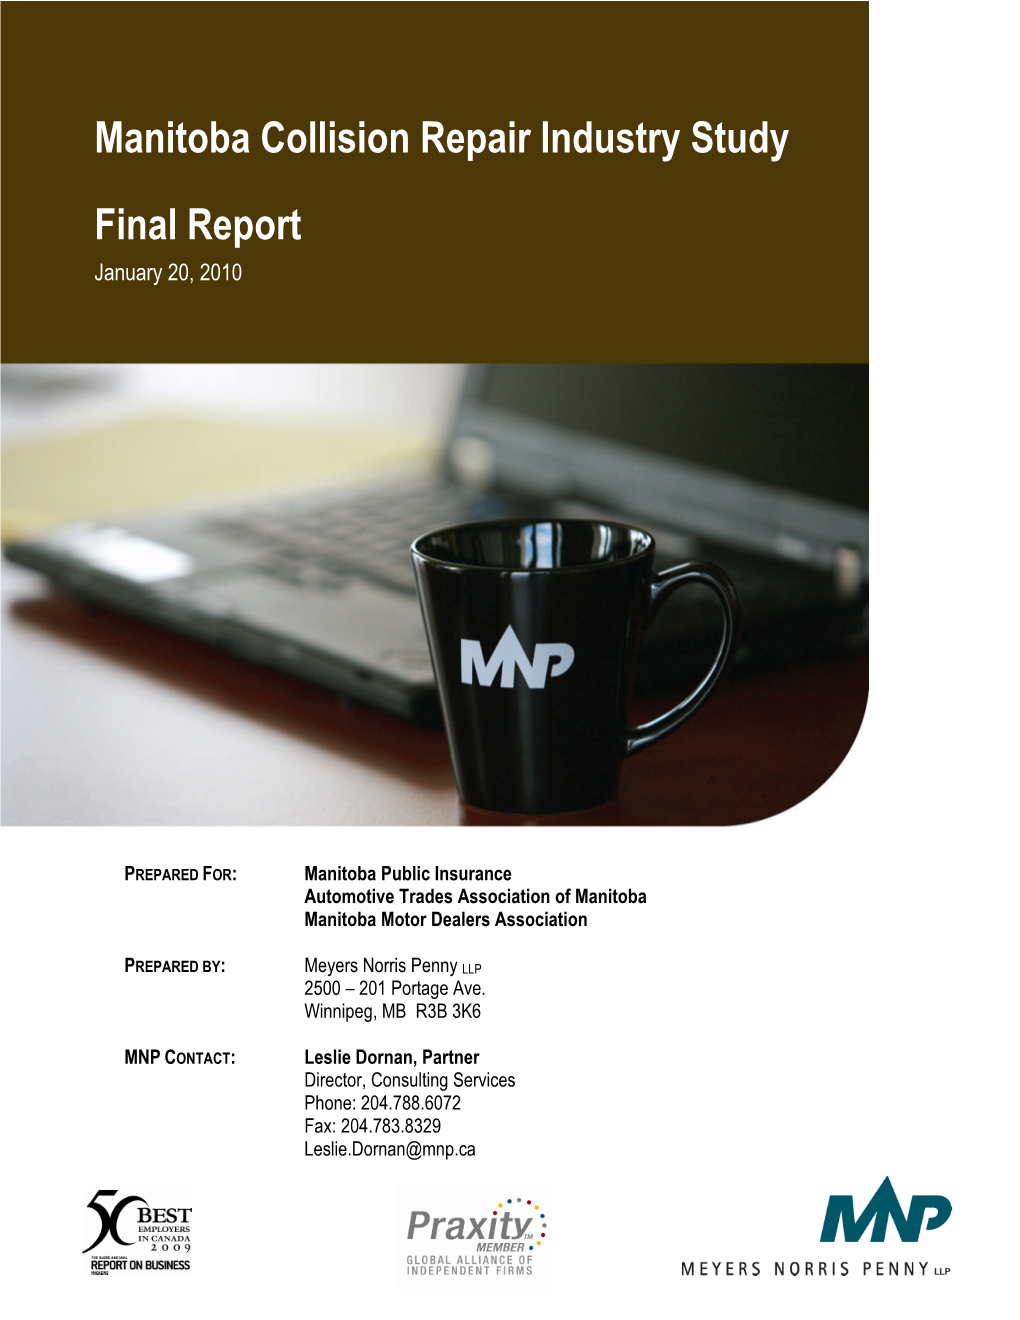 Manitoba Collision Repair Industry Study Final Report